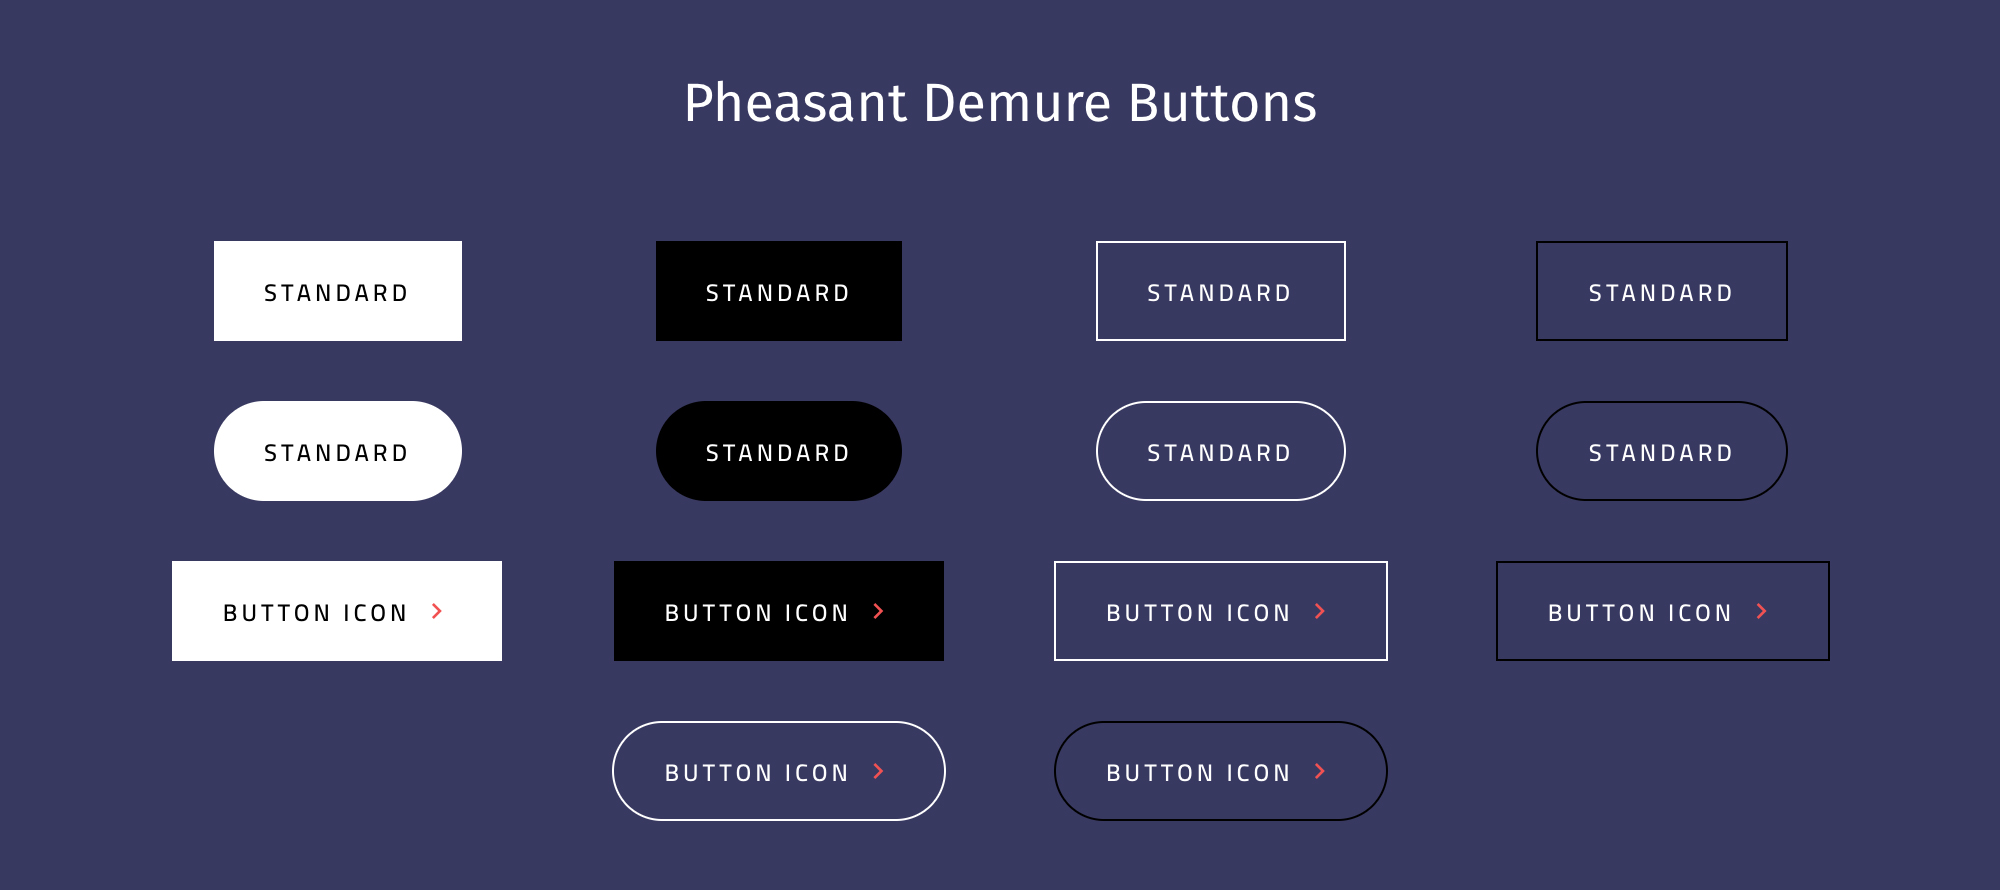 Pheasant Demure Buttons